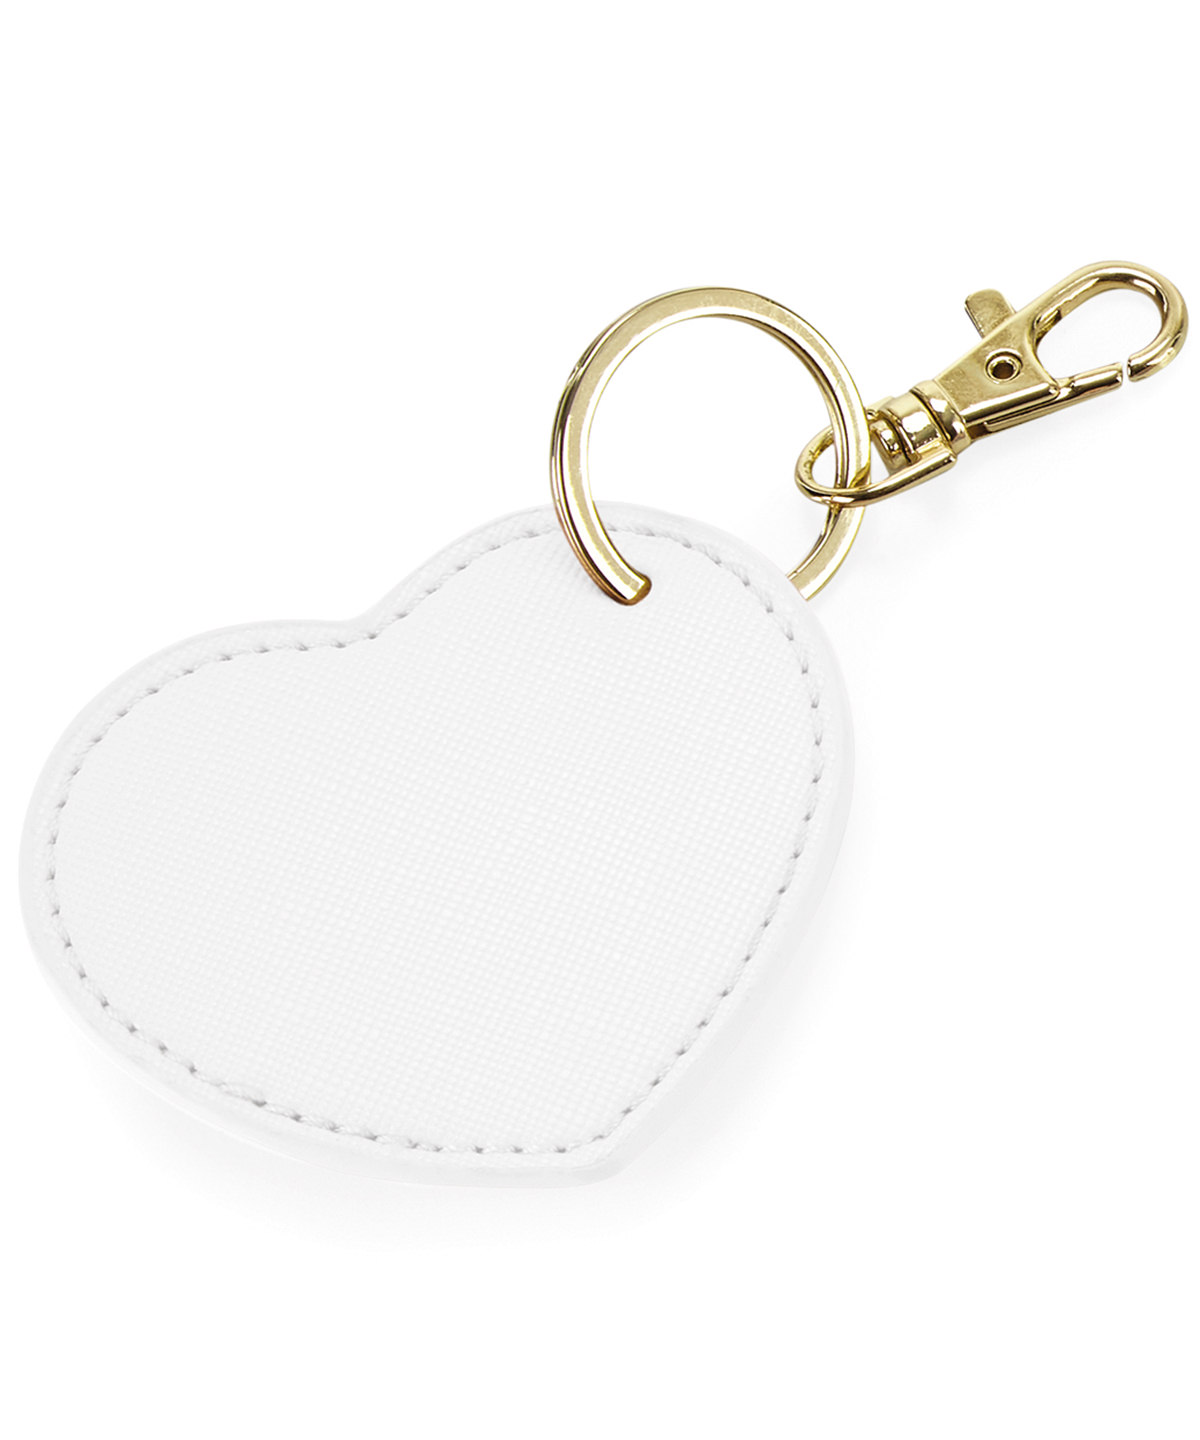 Boutique Heart Keyclip Soft White Size One Size